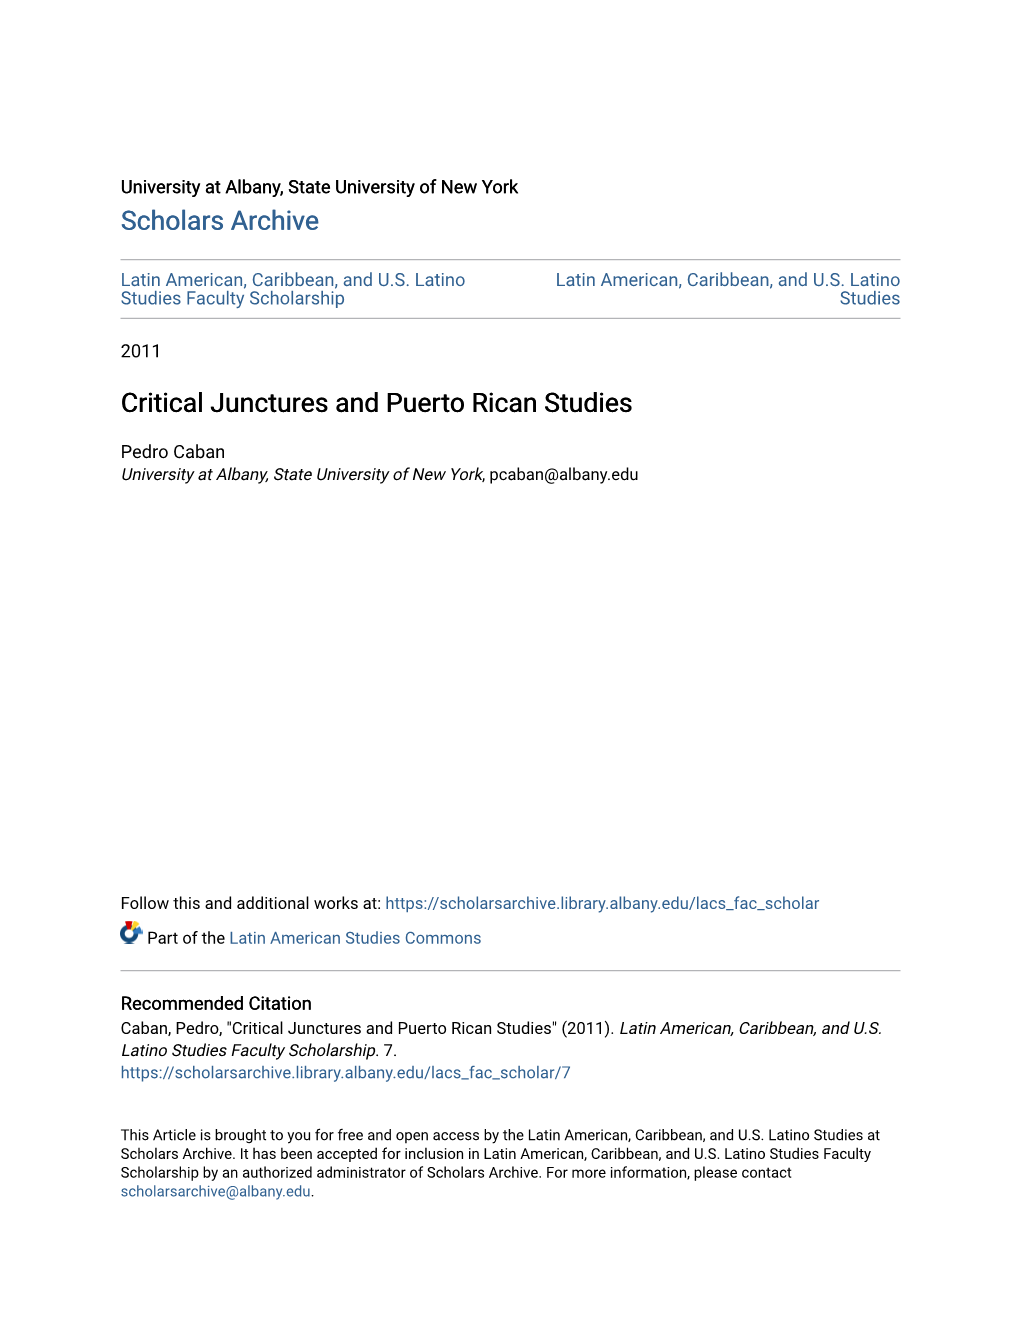 Critical Junctures and Puerto Rican Studies